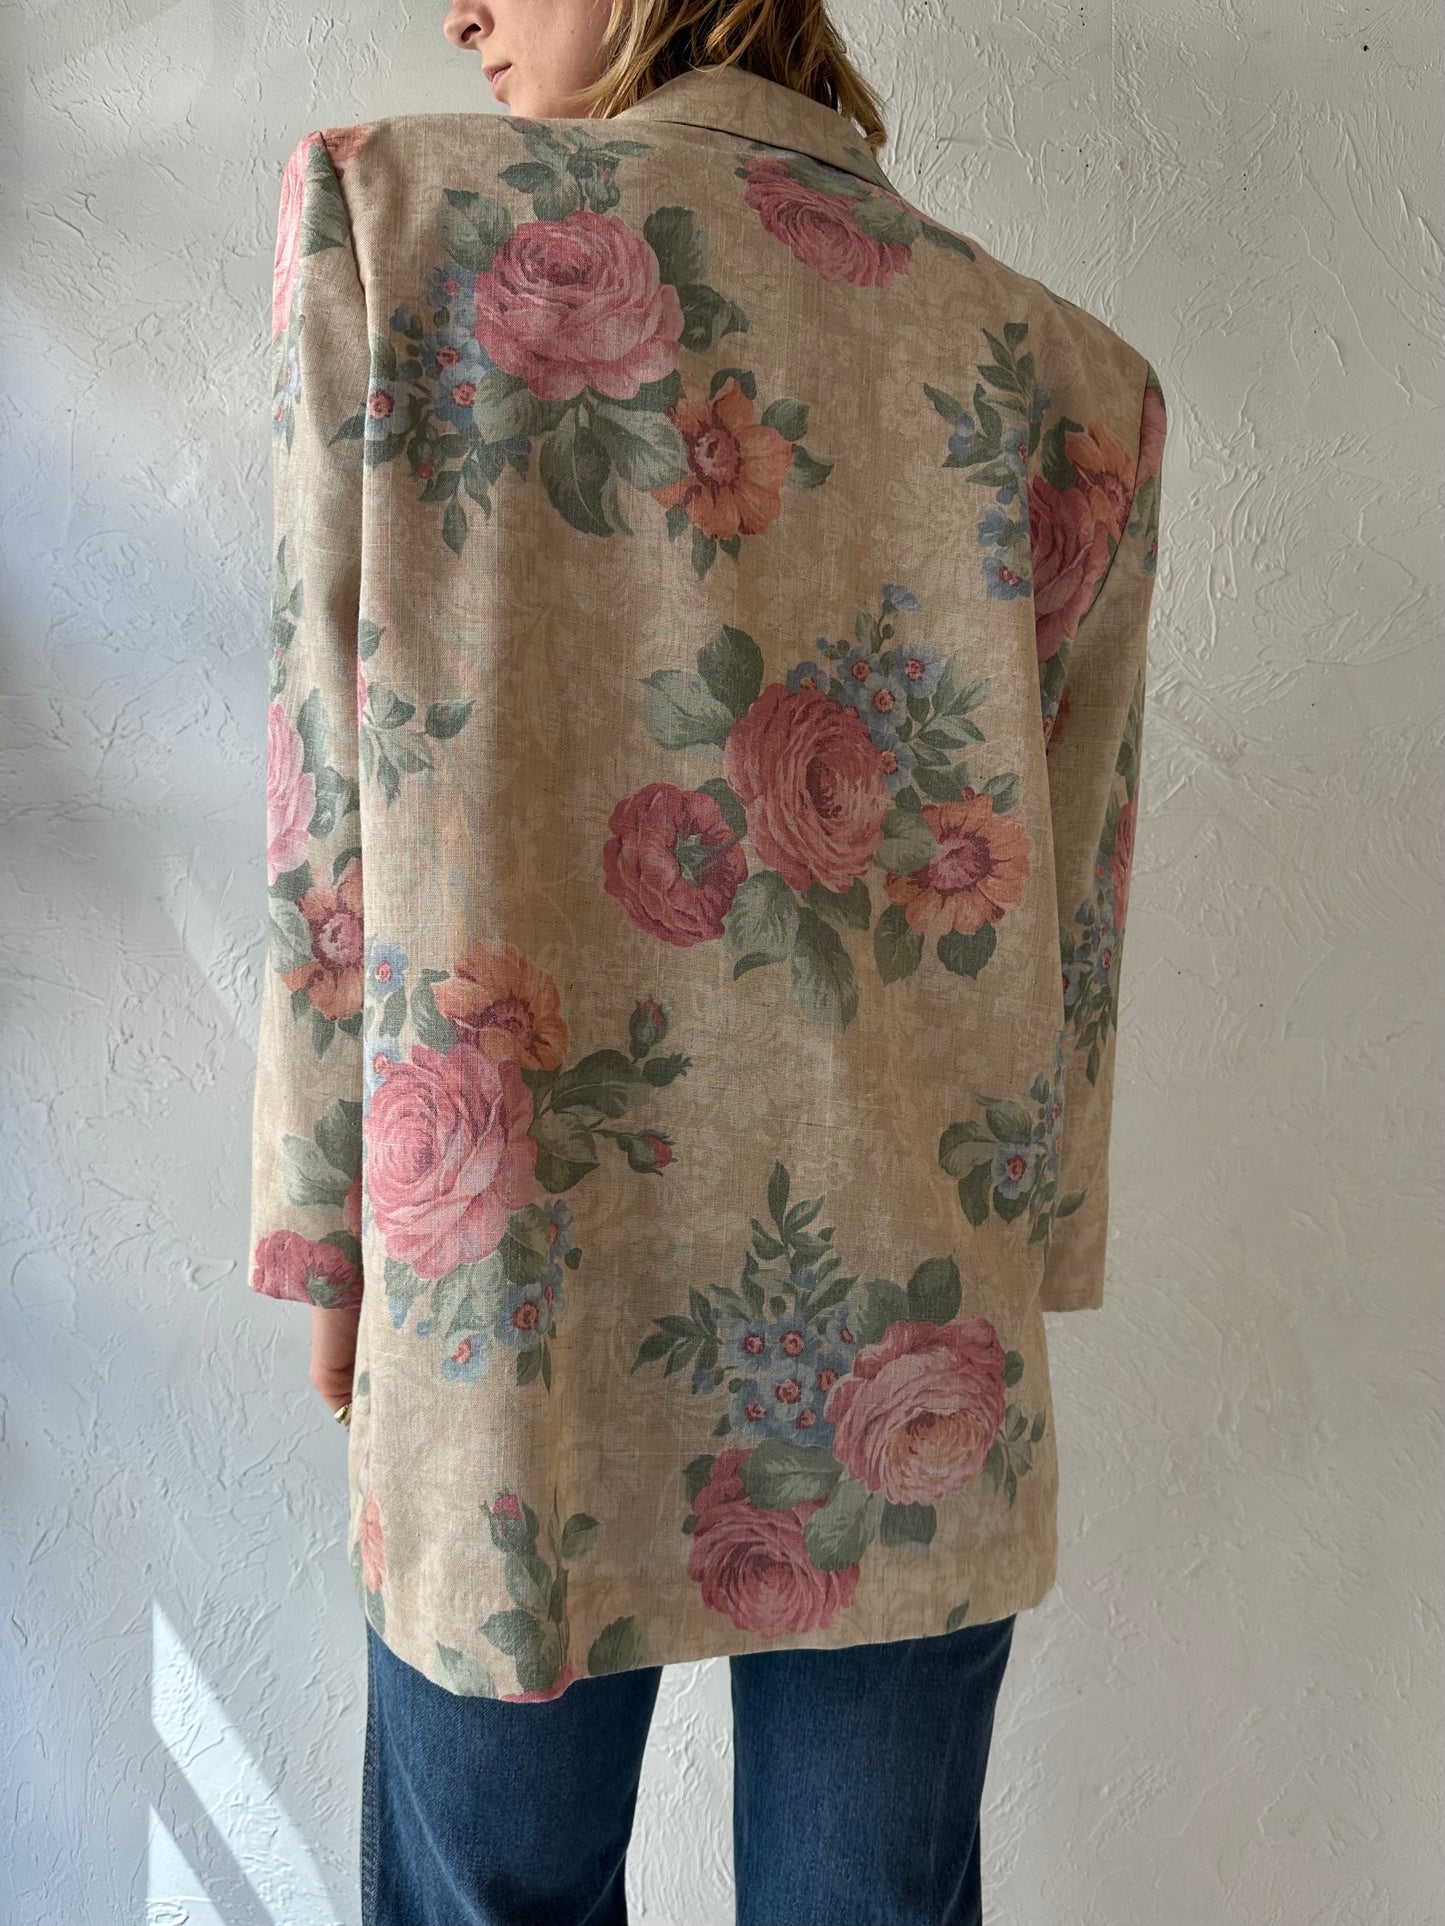 90s 'San Moire' Floral Blazer Jacket / Large